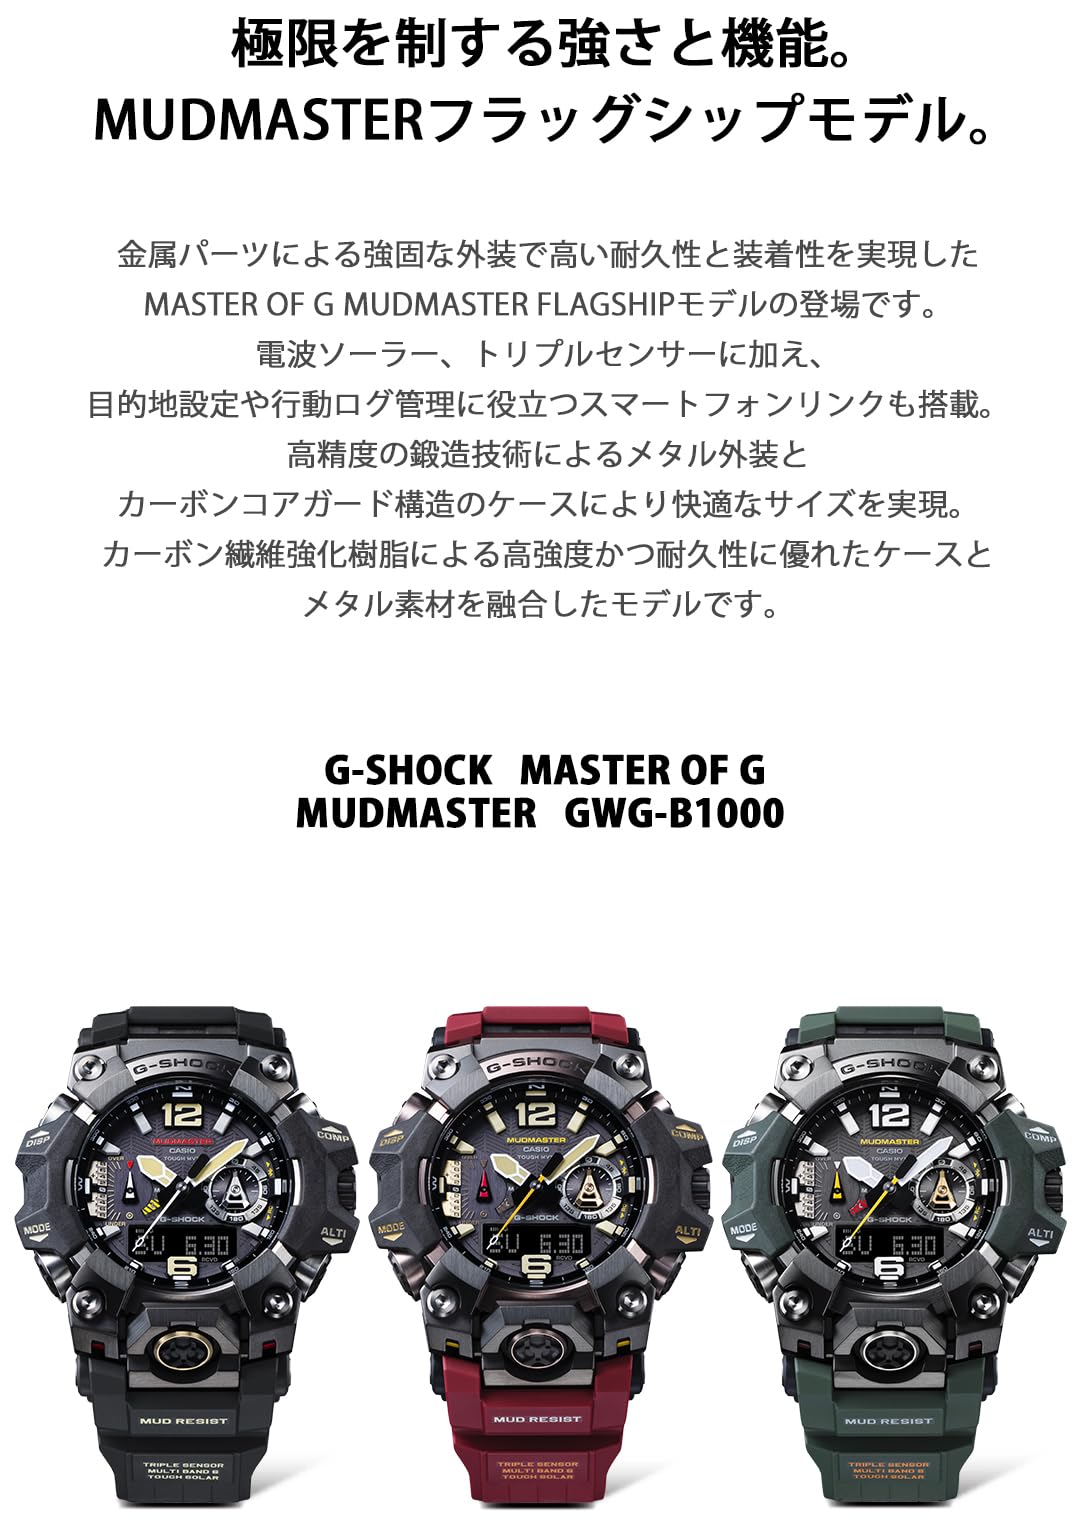 Casio G-Shock GWG-B1000-3AJF Master of G Series MUDMASTER Flagship Model Triple Sensor Japan Import New